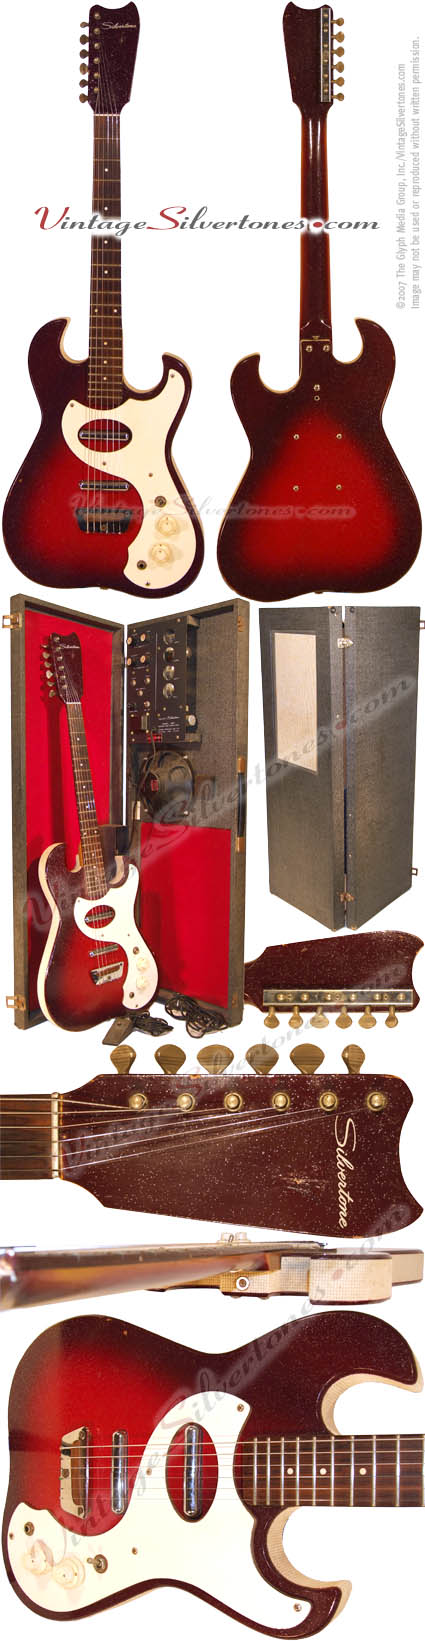 Silvertone 1457-Danelectro-made 2 pickup, electric guitar amp in case, 1964, red burst